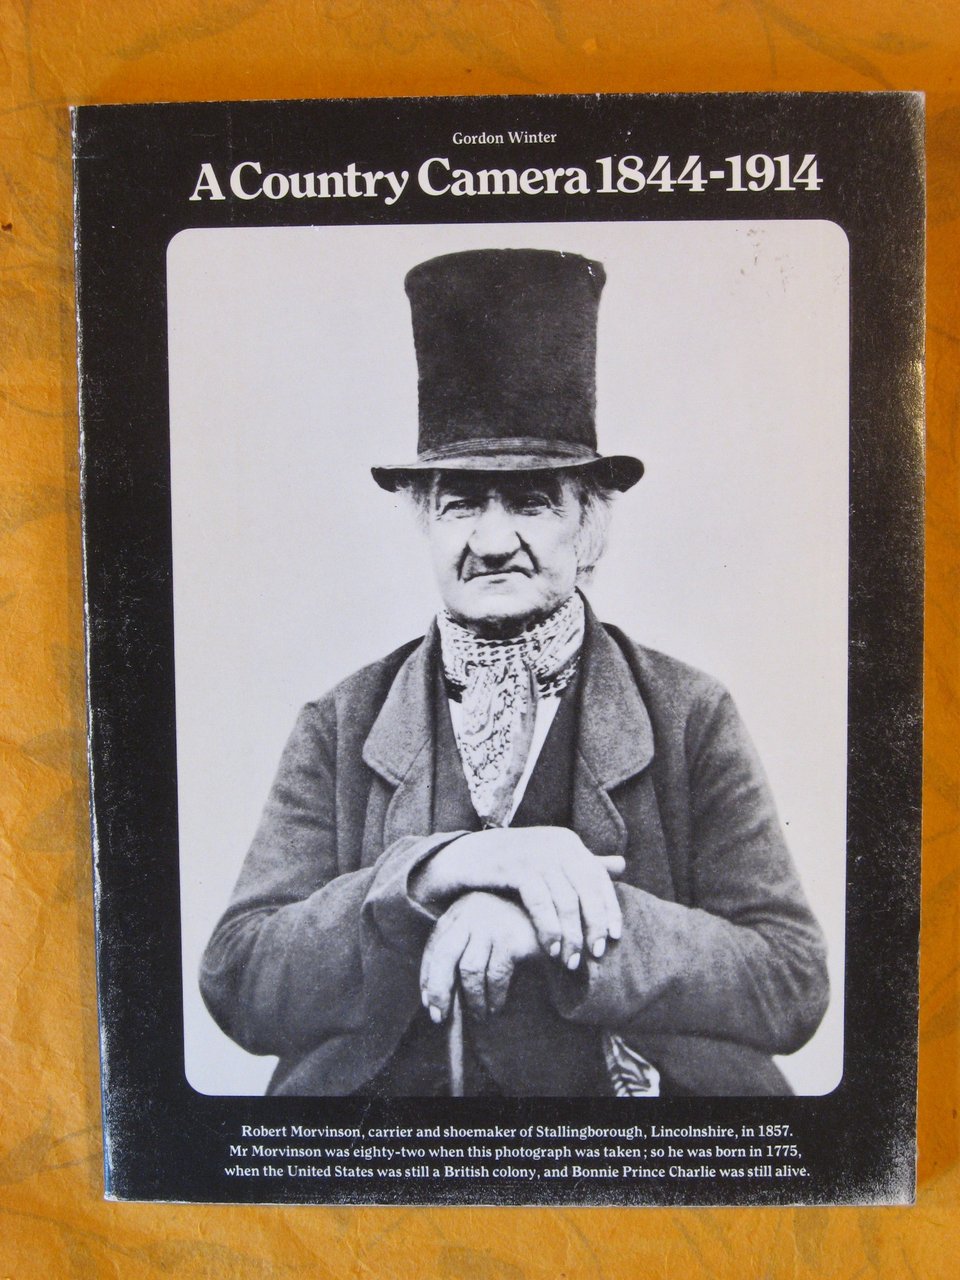 A Country Camera, 1844-1914